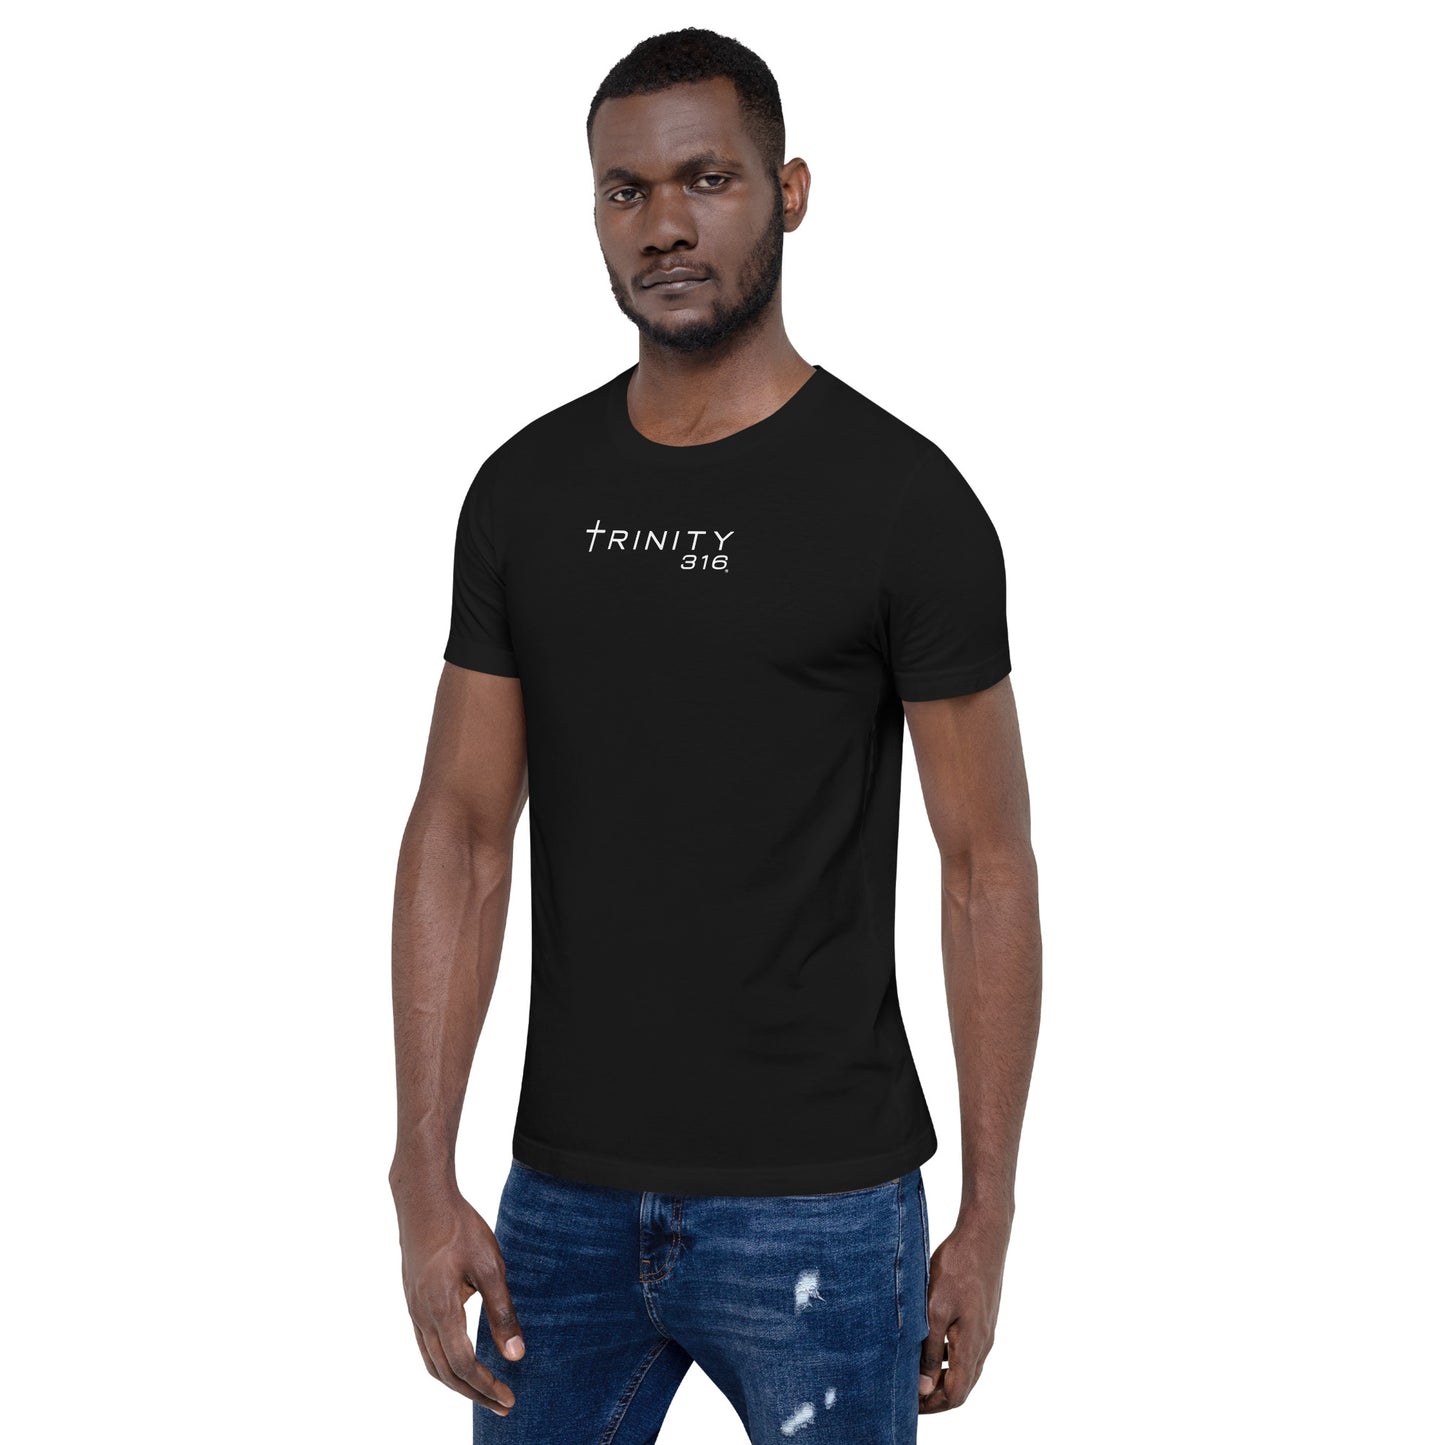 Trinity 316 T-Shirt | V2 - Black